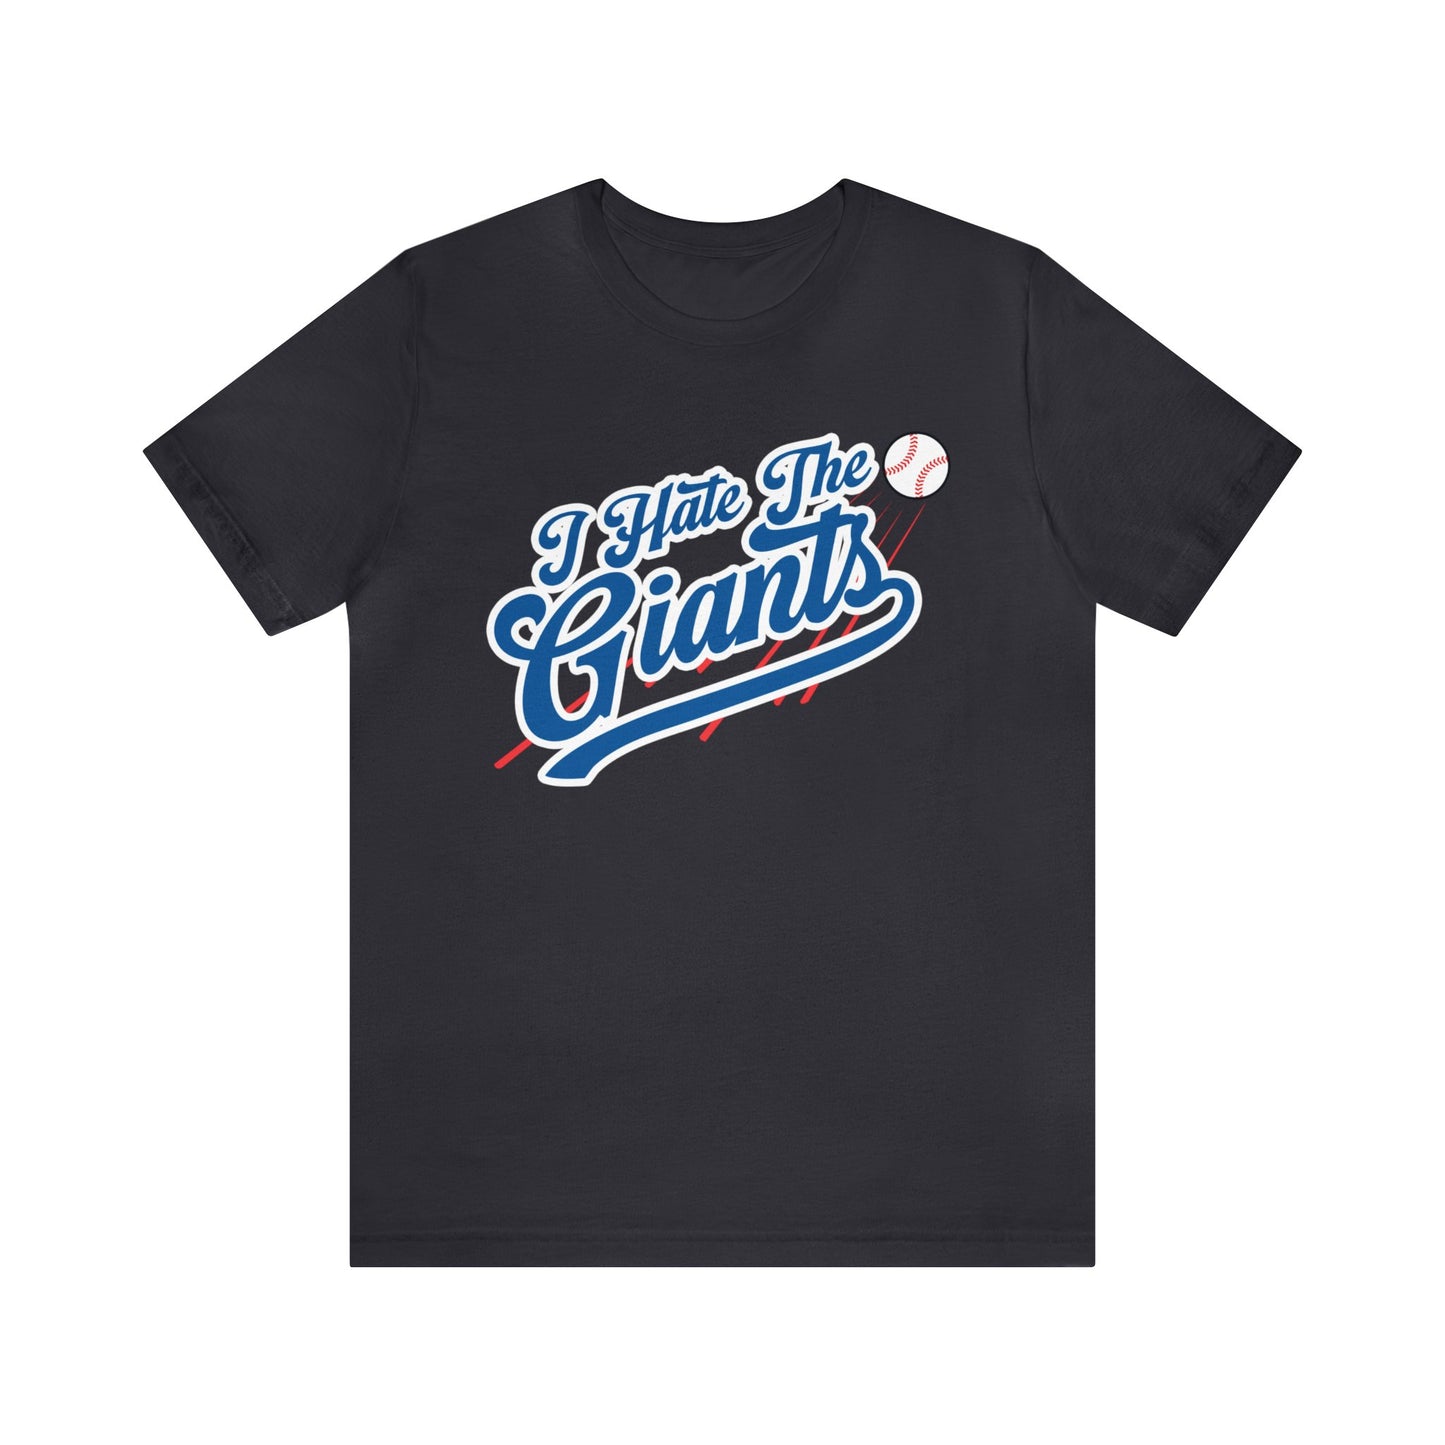 I Hate That San Fran Team (LA Dodgers fans) - Unisex Jersey Short Sleeve Tee